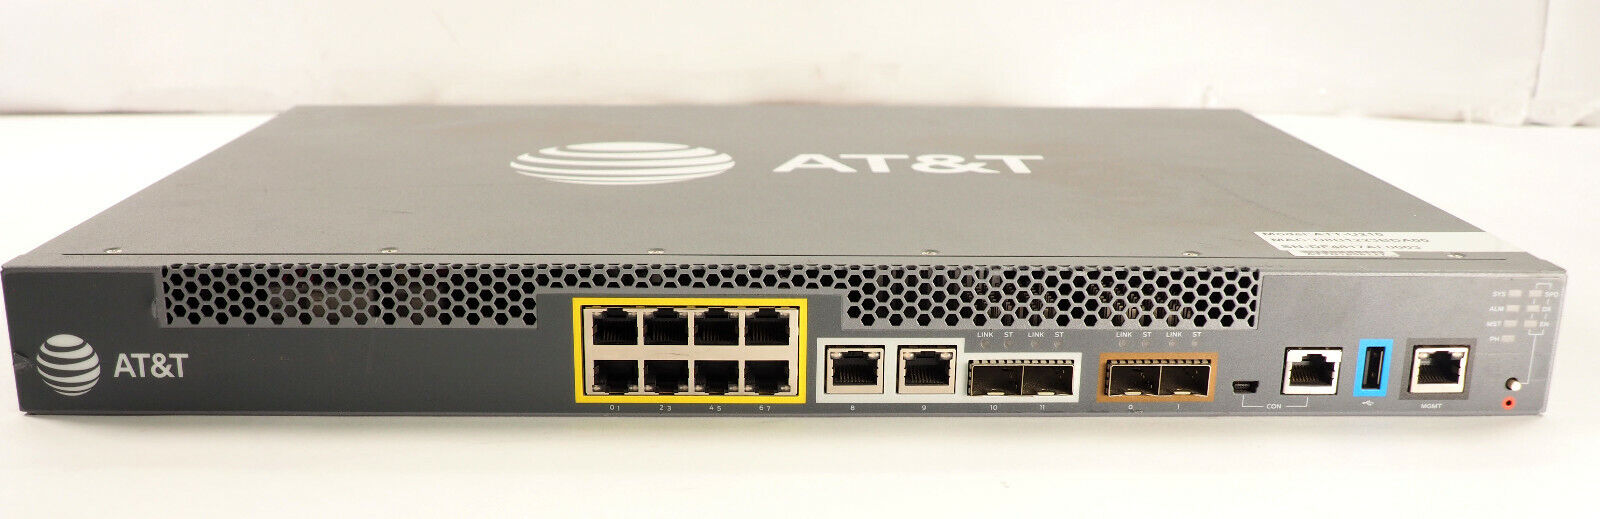 Juniper Networks NFX250-ATT-LS1 ATT-U210 16GB PC4 Ram Network Services Platform